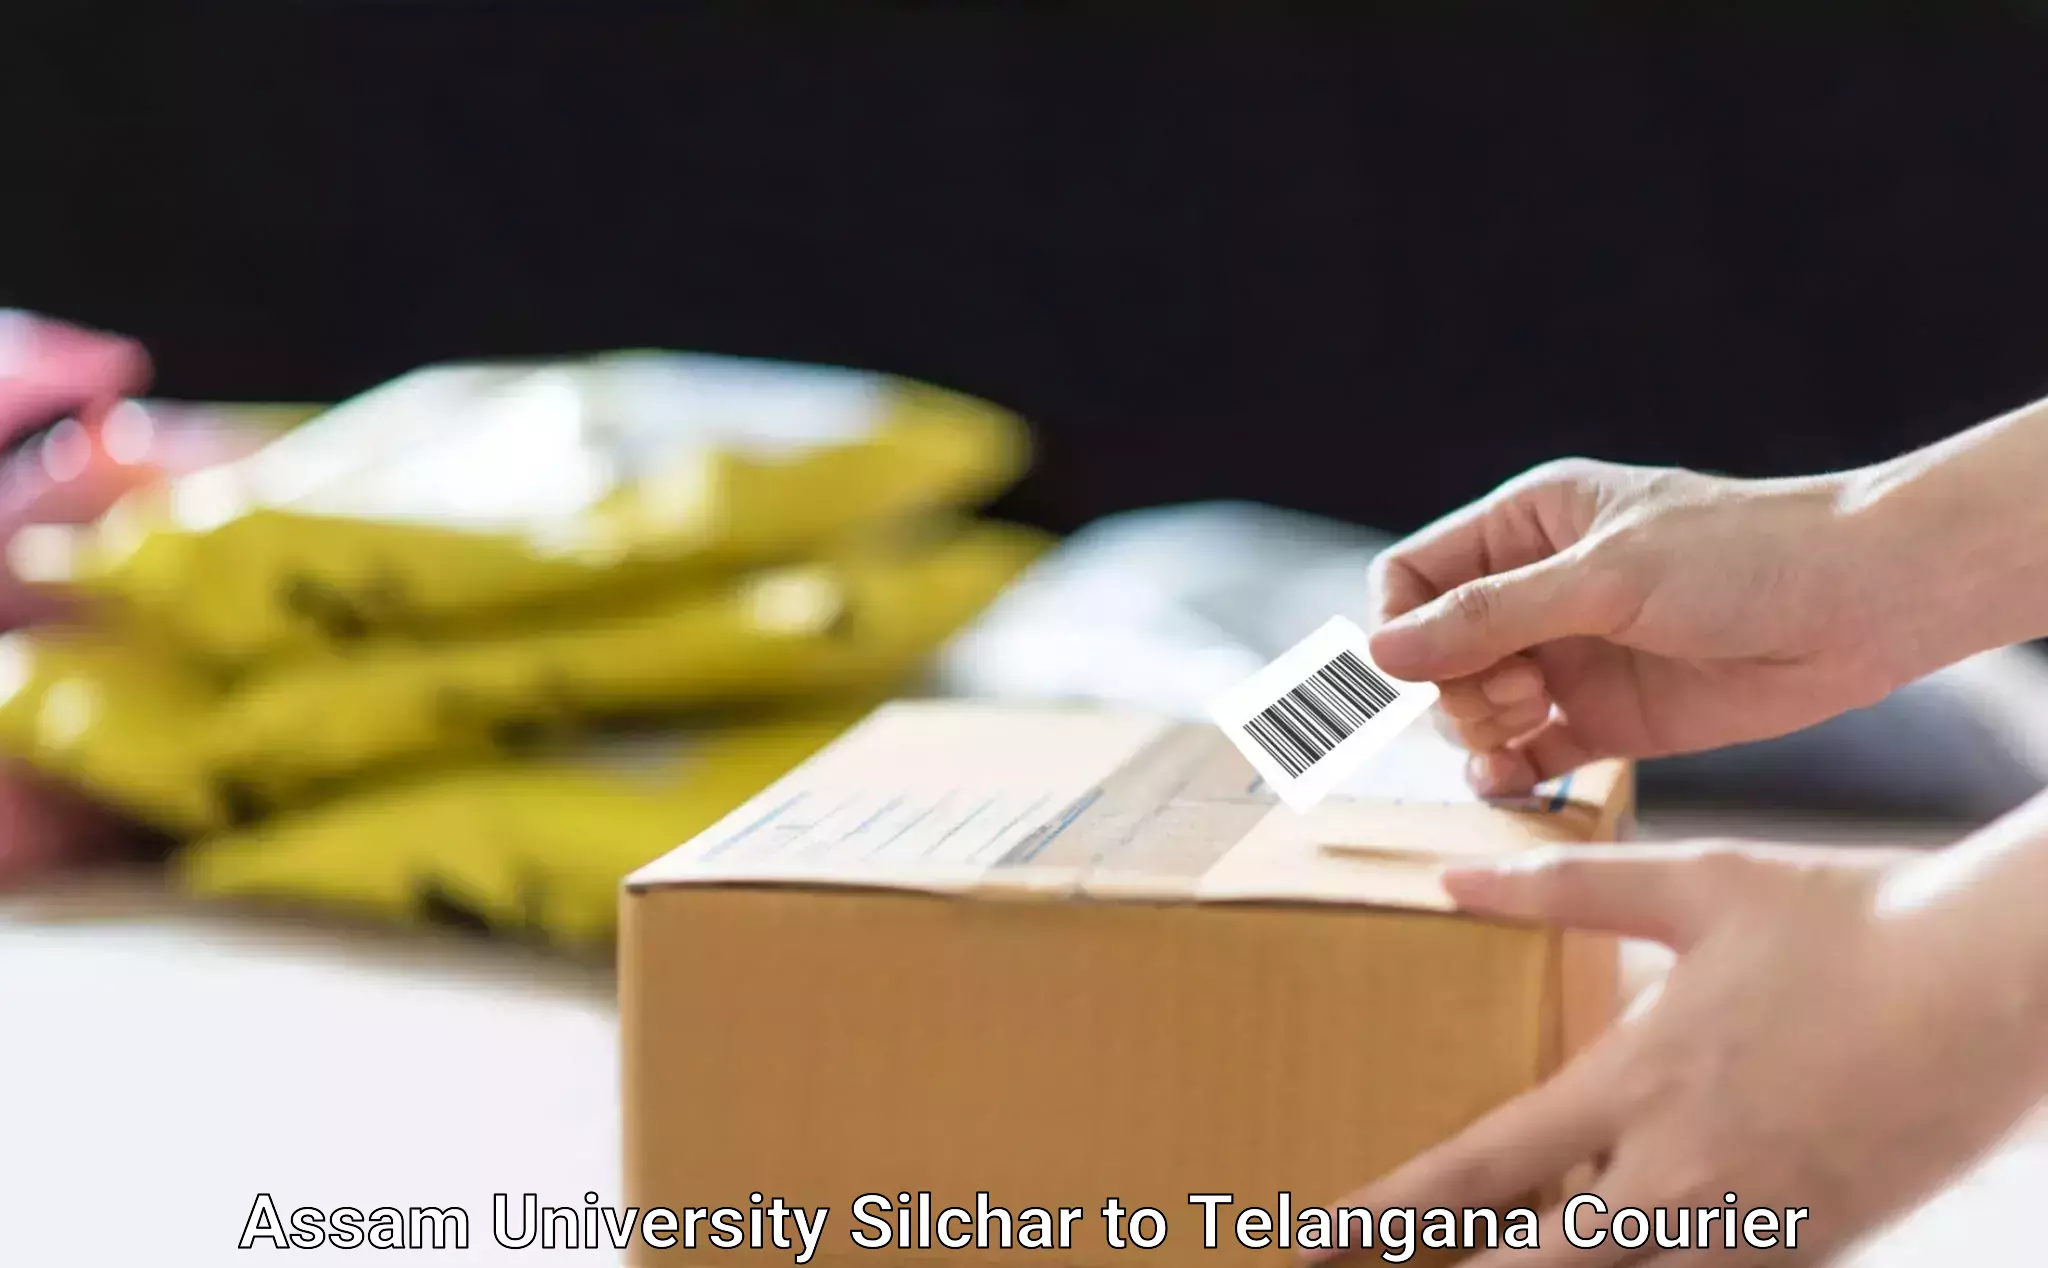 Bulk courier orders Assam University Silchar to Telangana